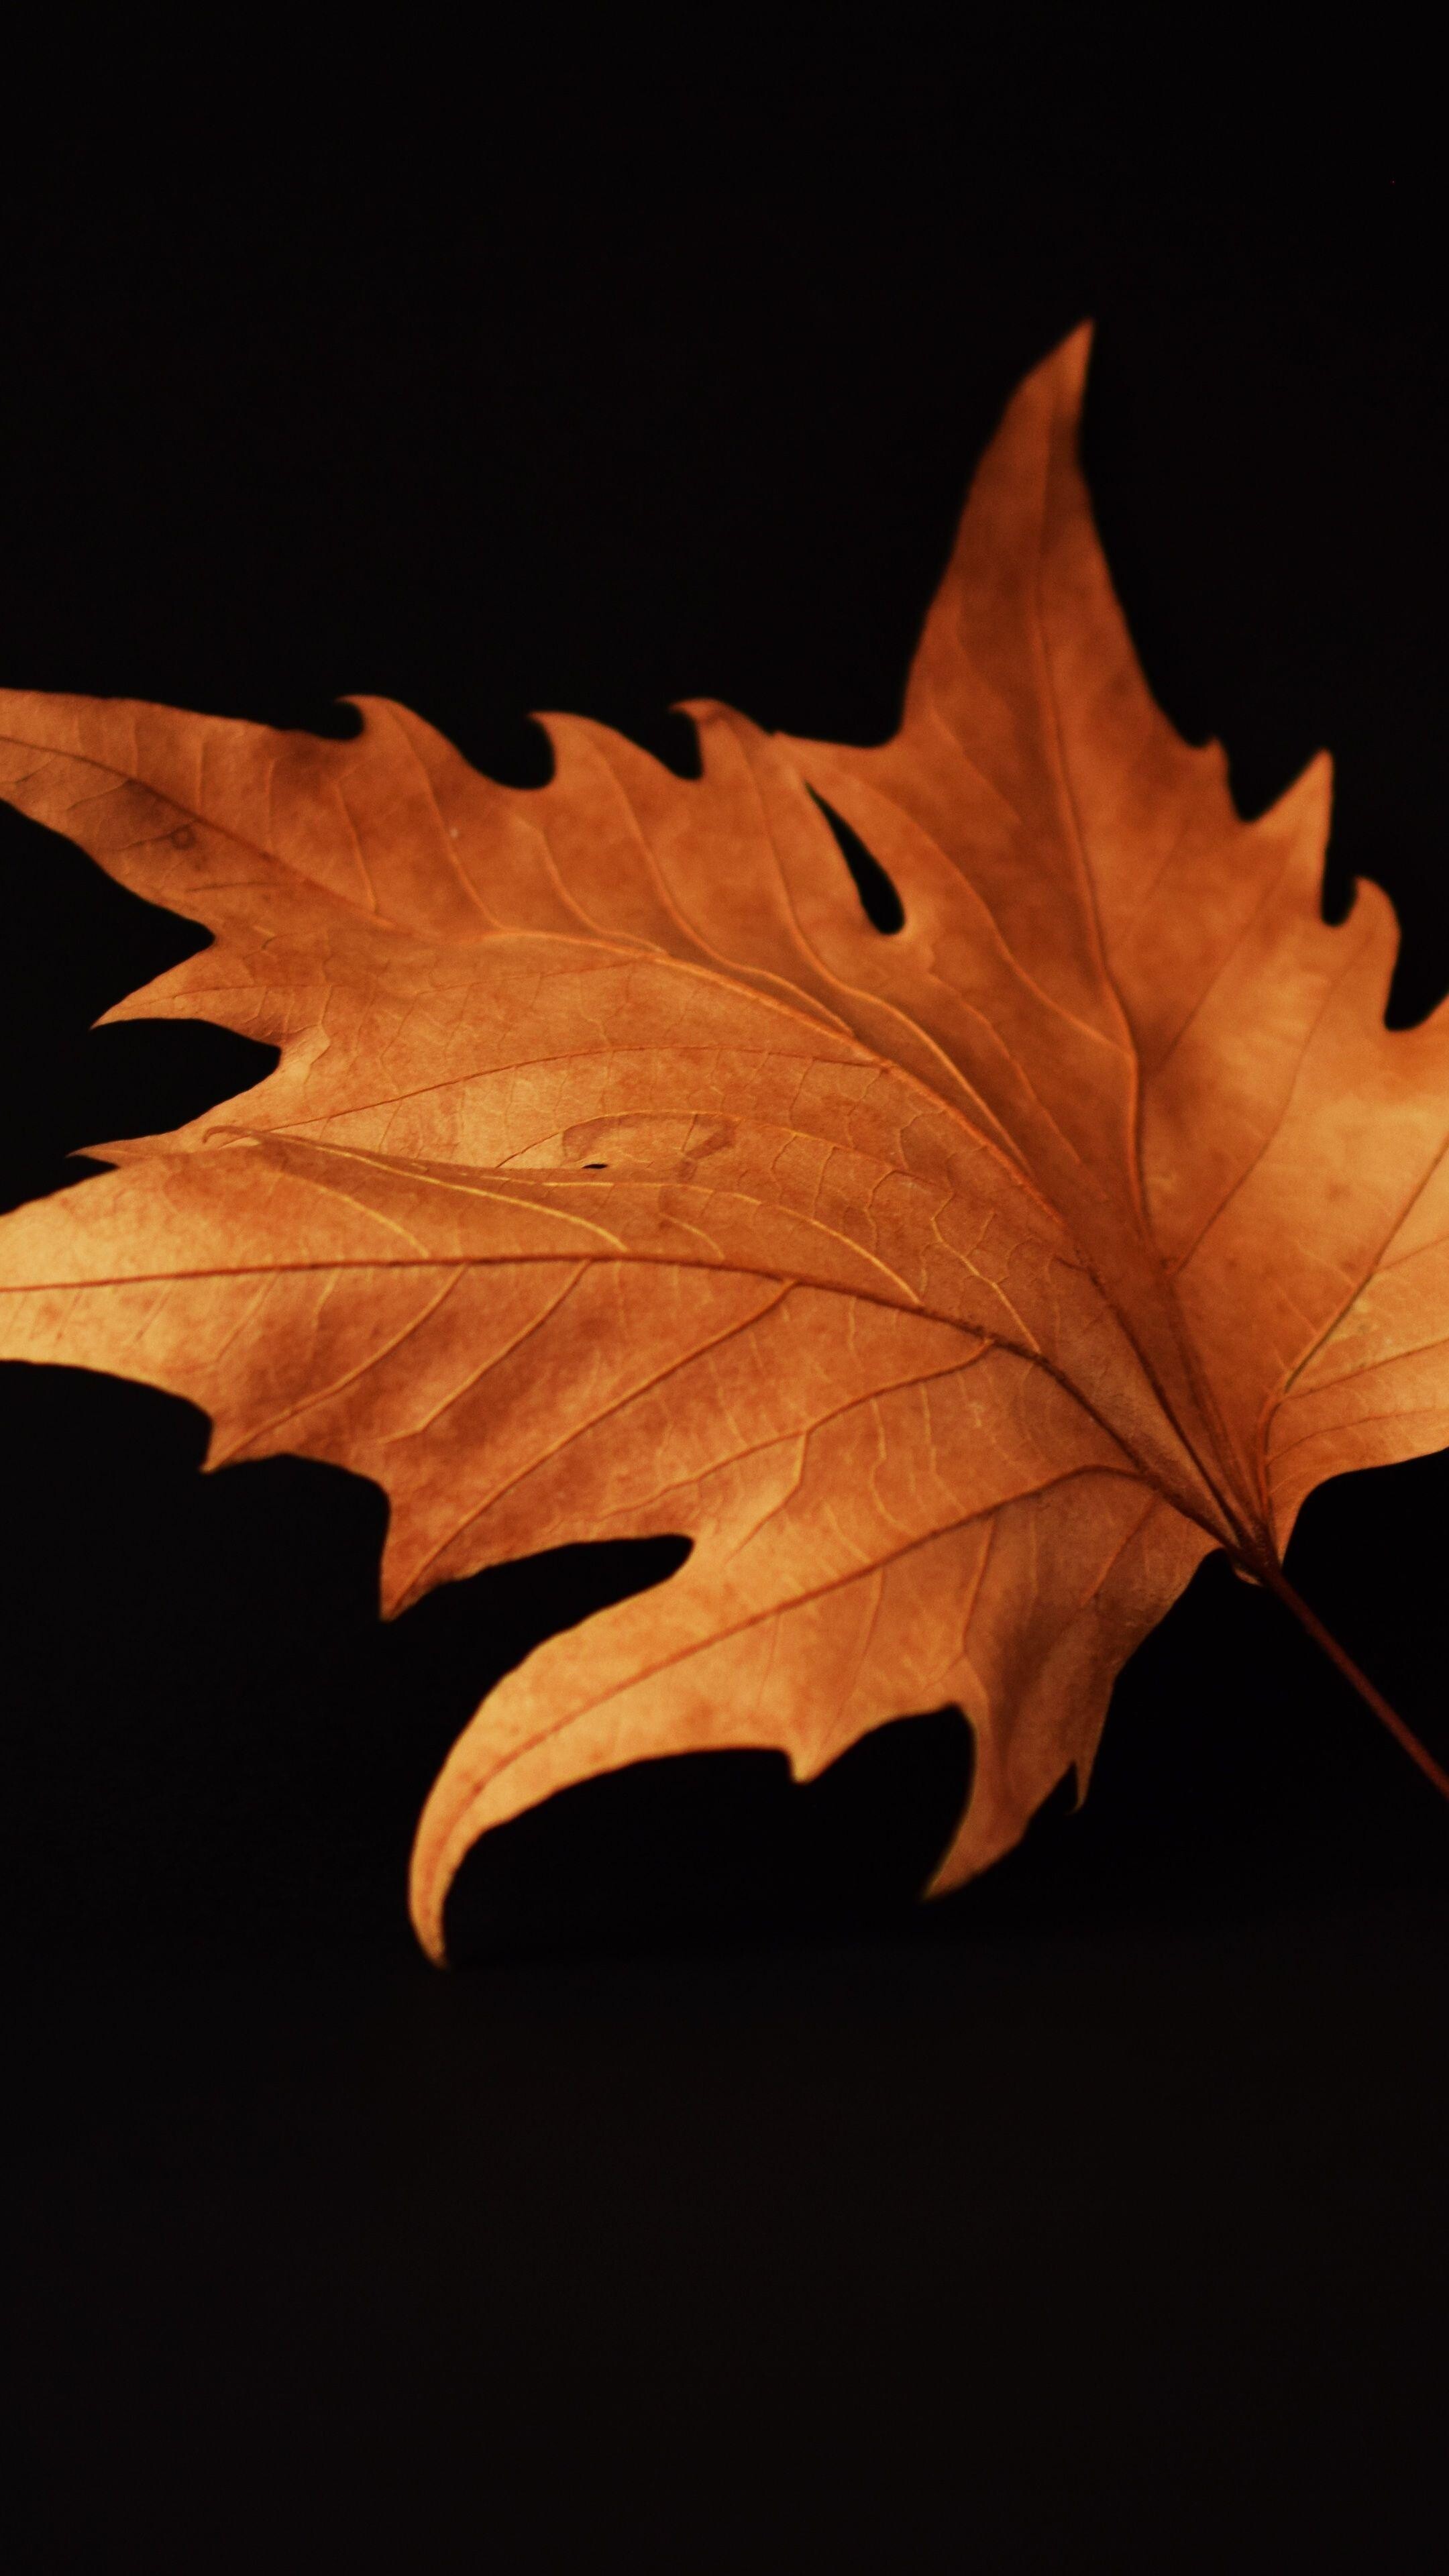 Gold Leaf: Dried maple leaf, Preserved leaves for floral arranging and home decorating. 2160x3840 4K Wallpaper.